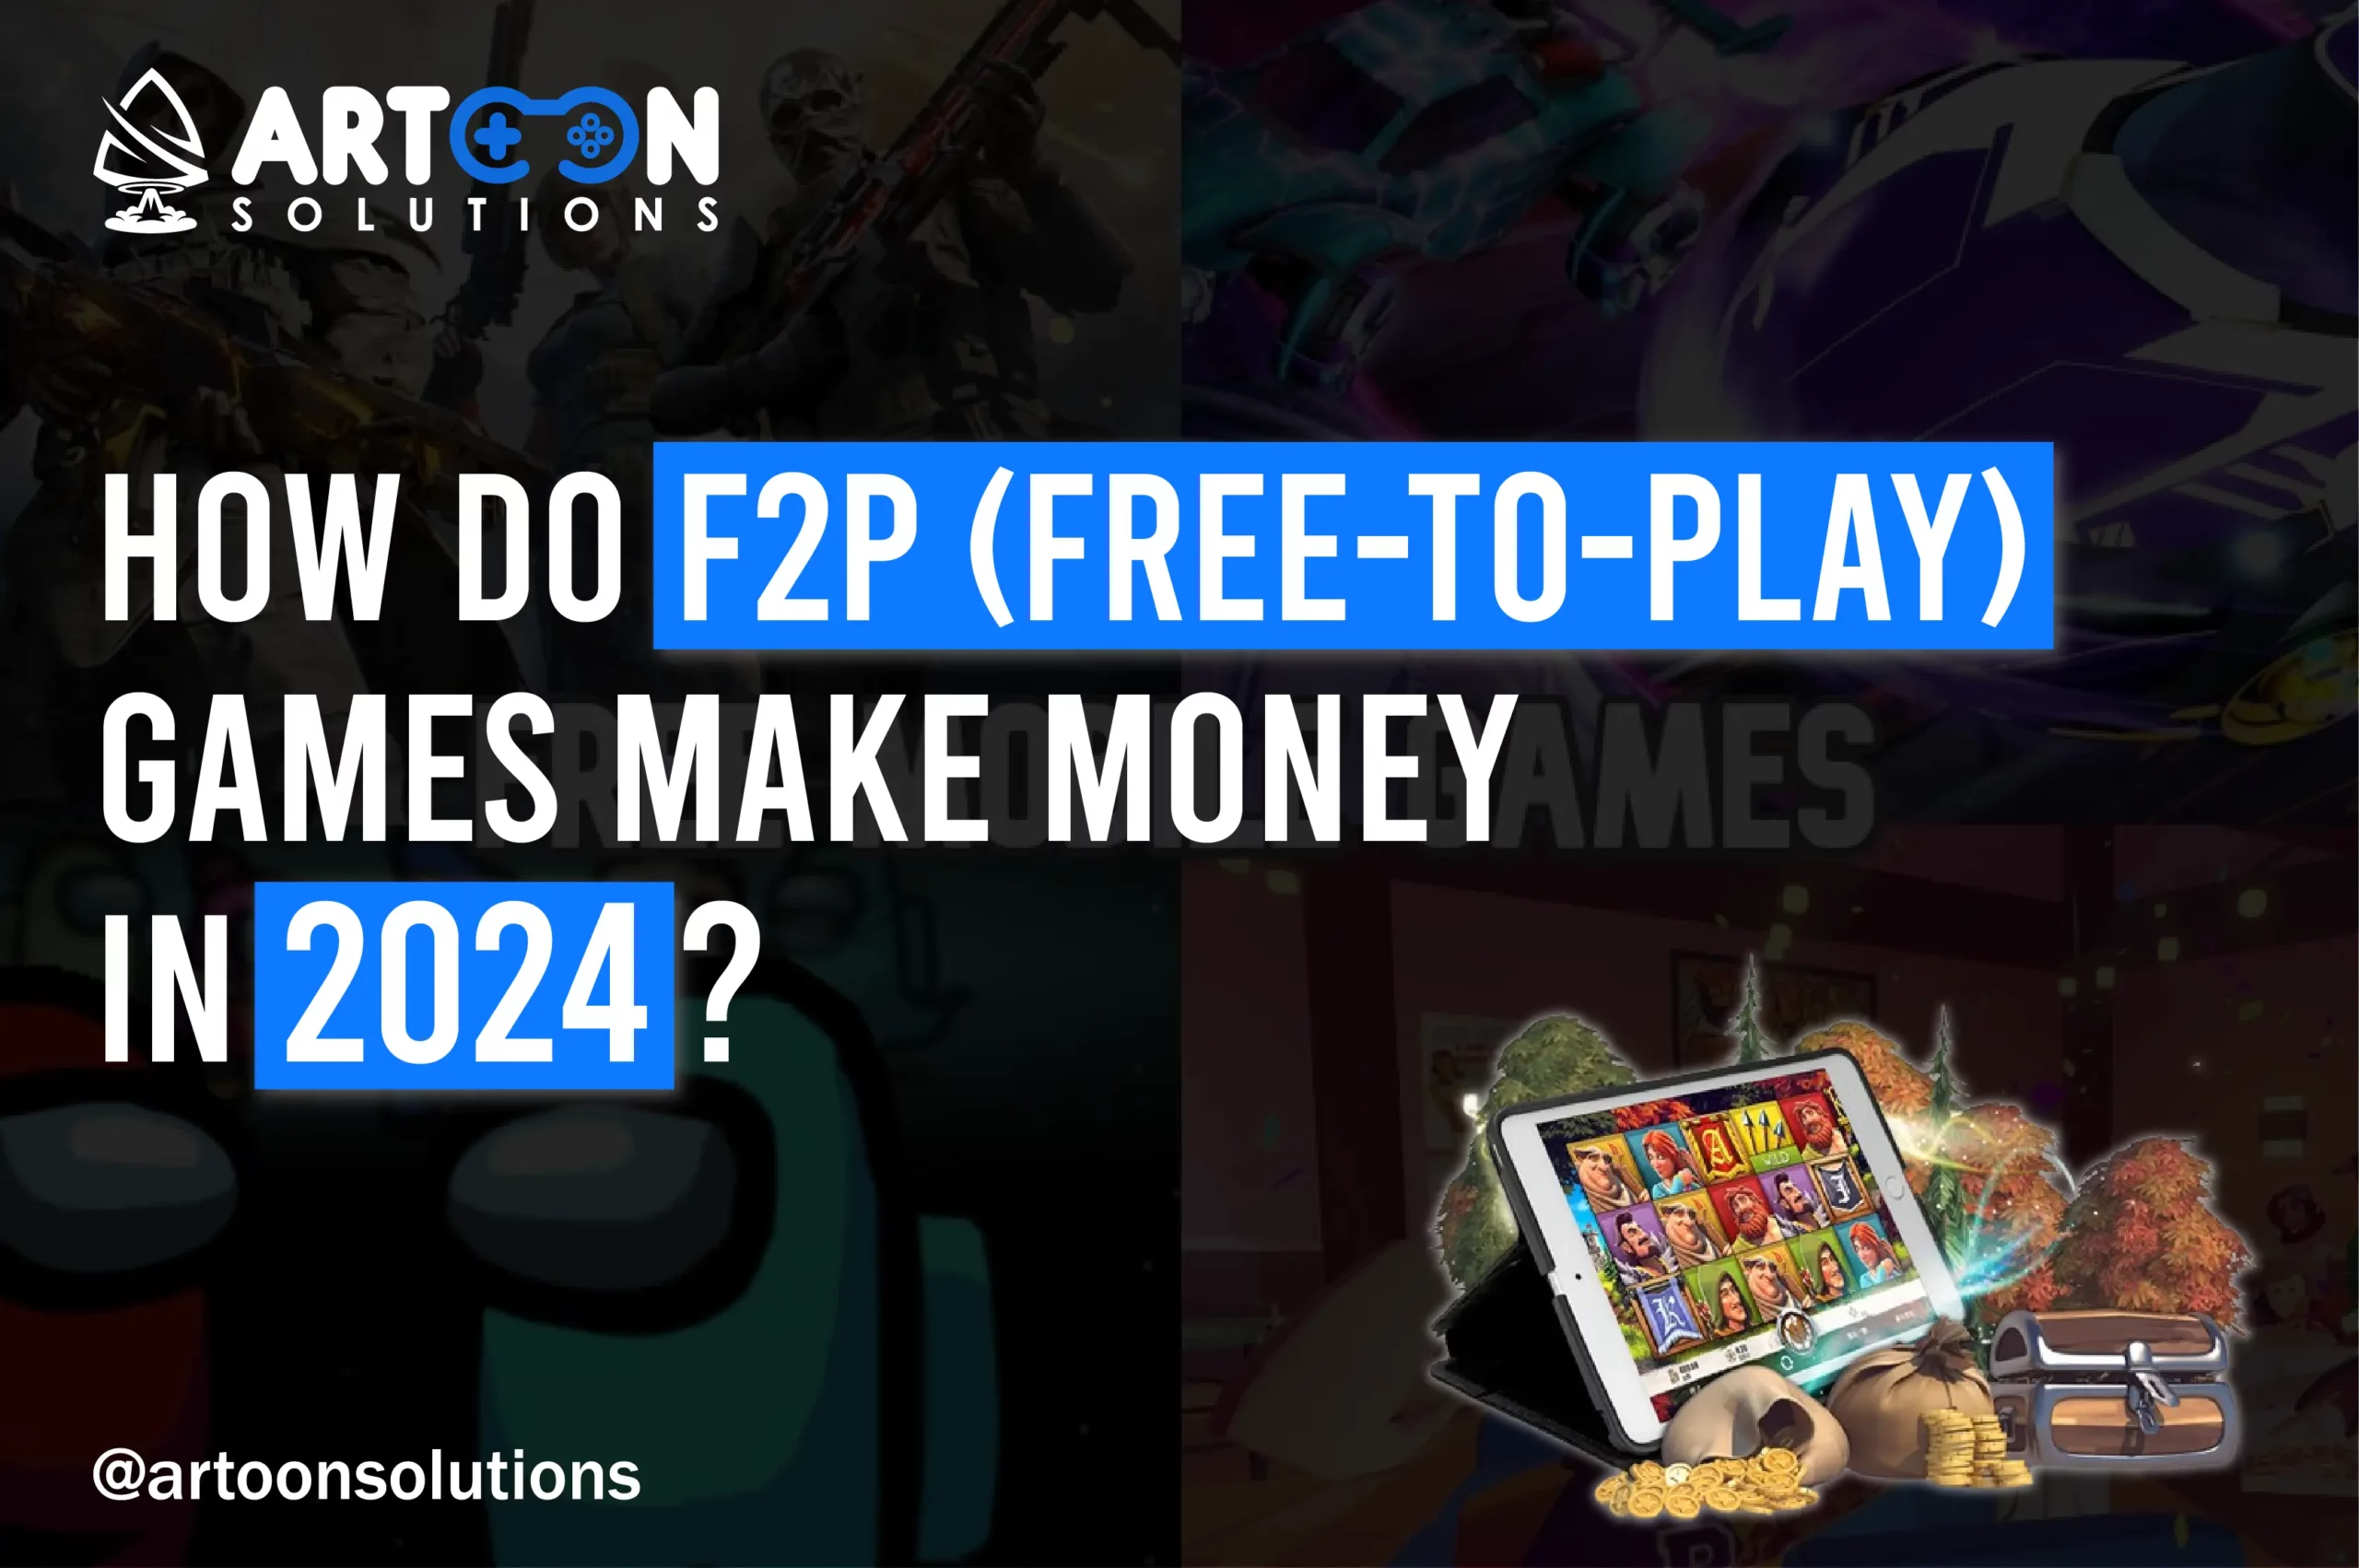 How do F2P (free-to-play) games make money